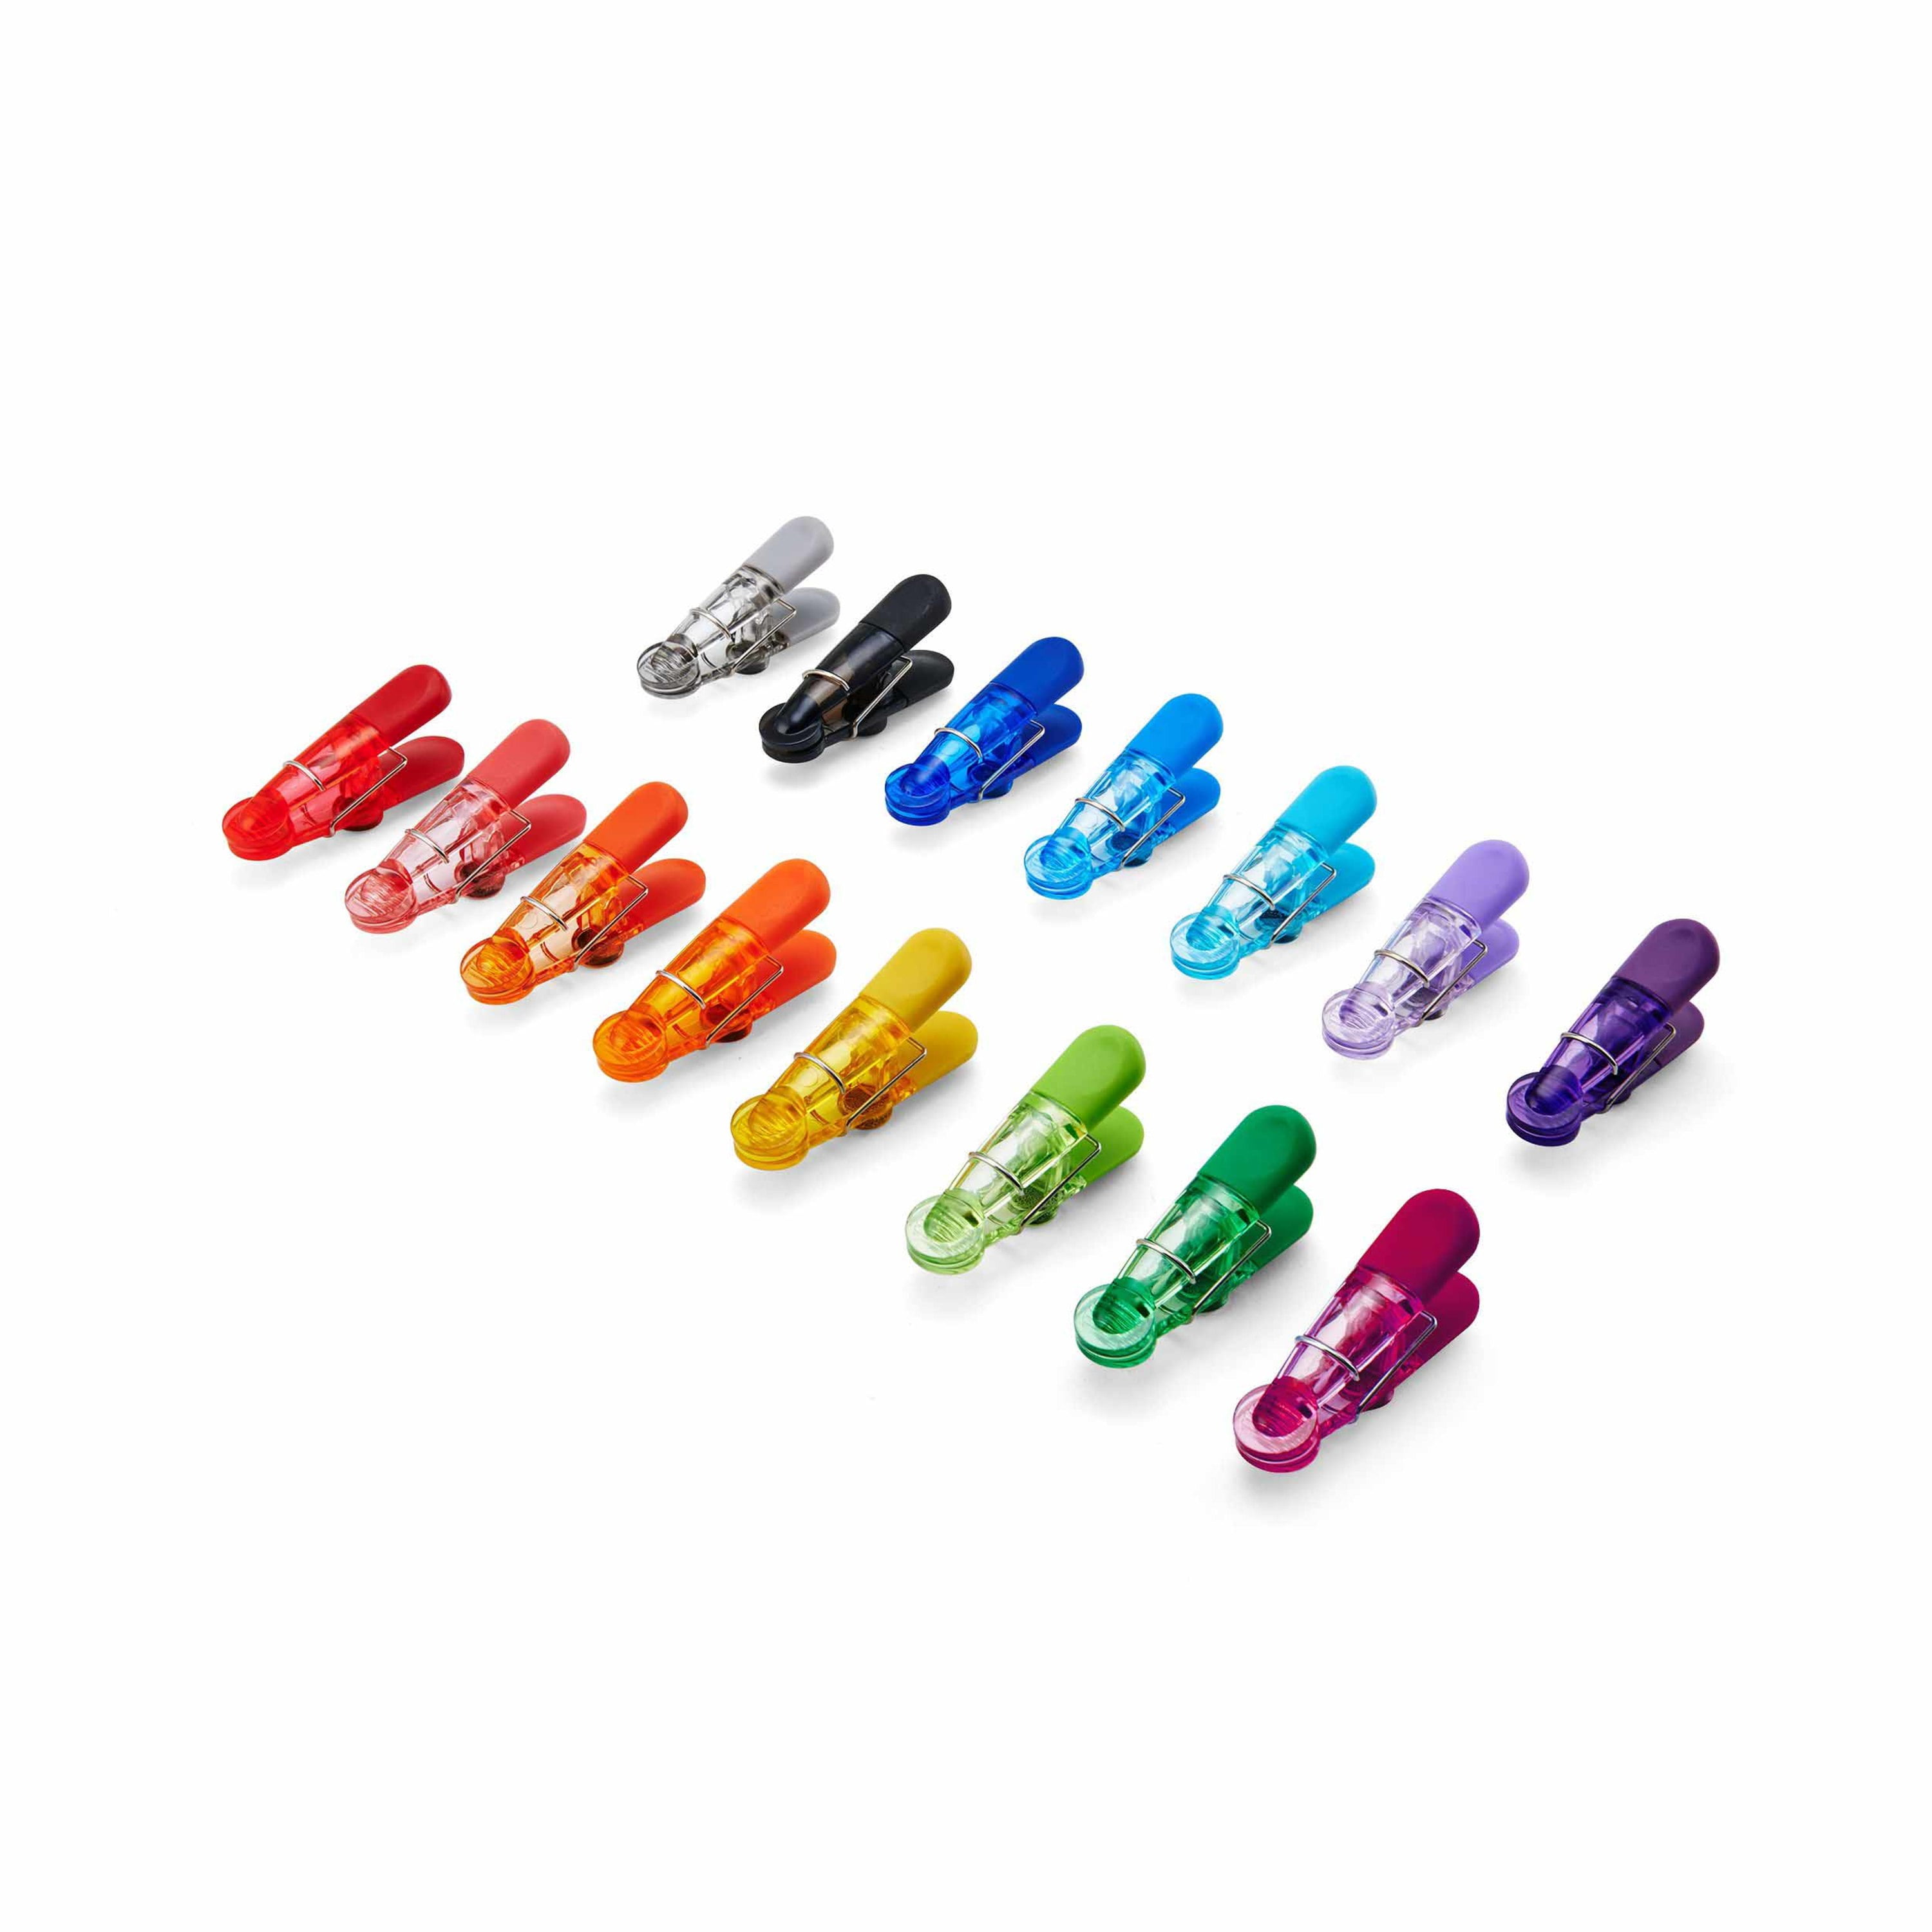 Farberware Classic Set of 15 Bag Clips in Translucent Colors 